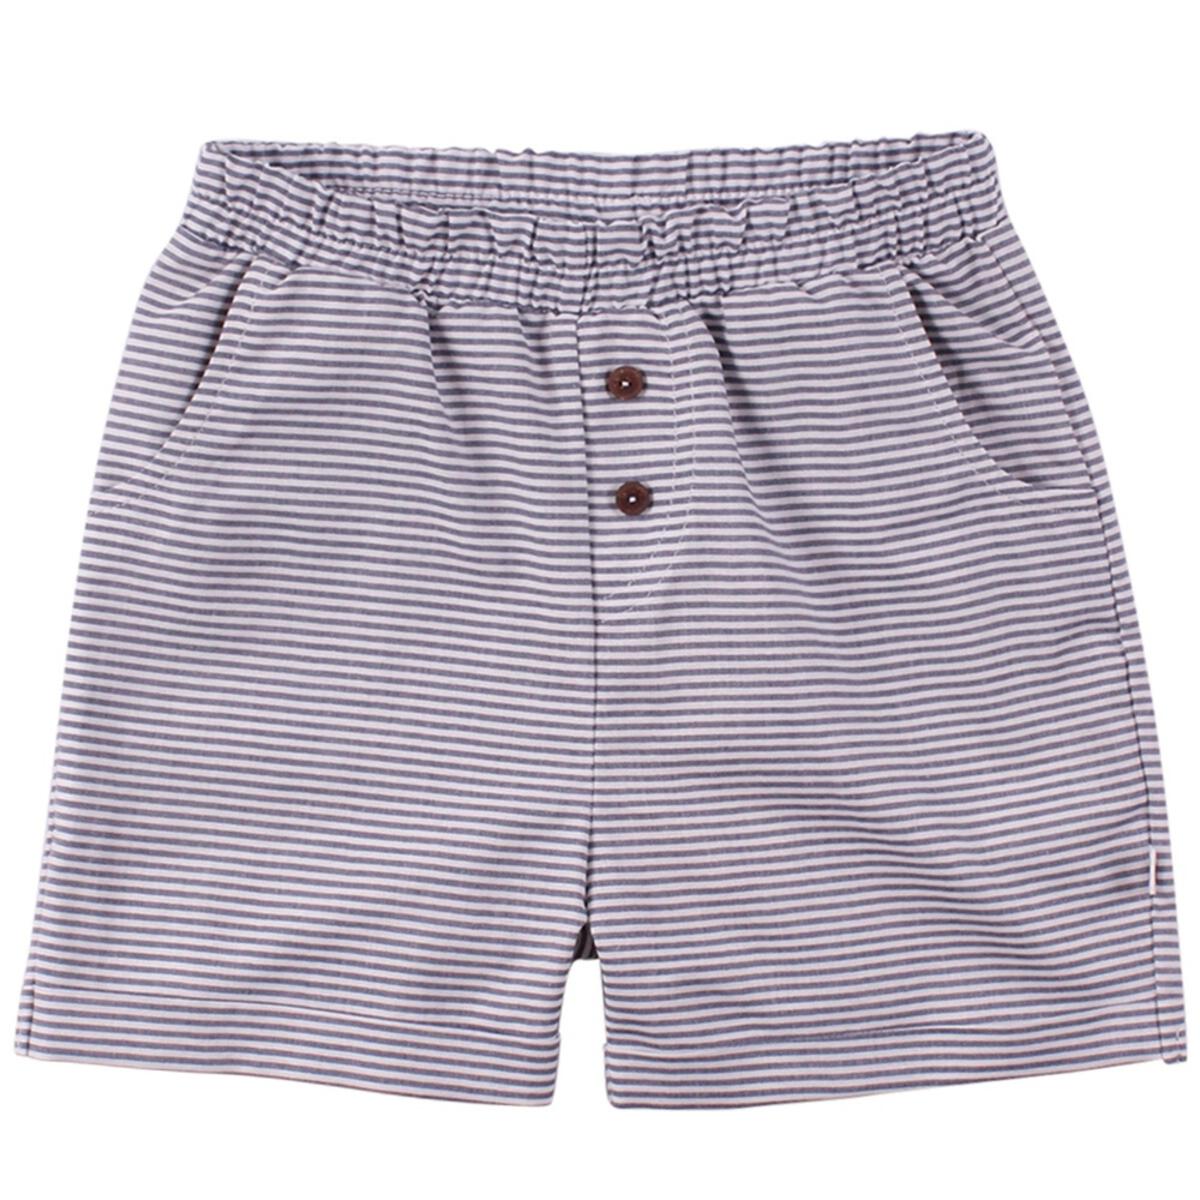 MÜSLI - Woven Stripe Shorts - White/Blue Stripe